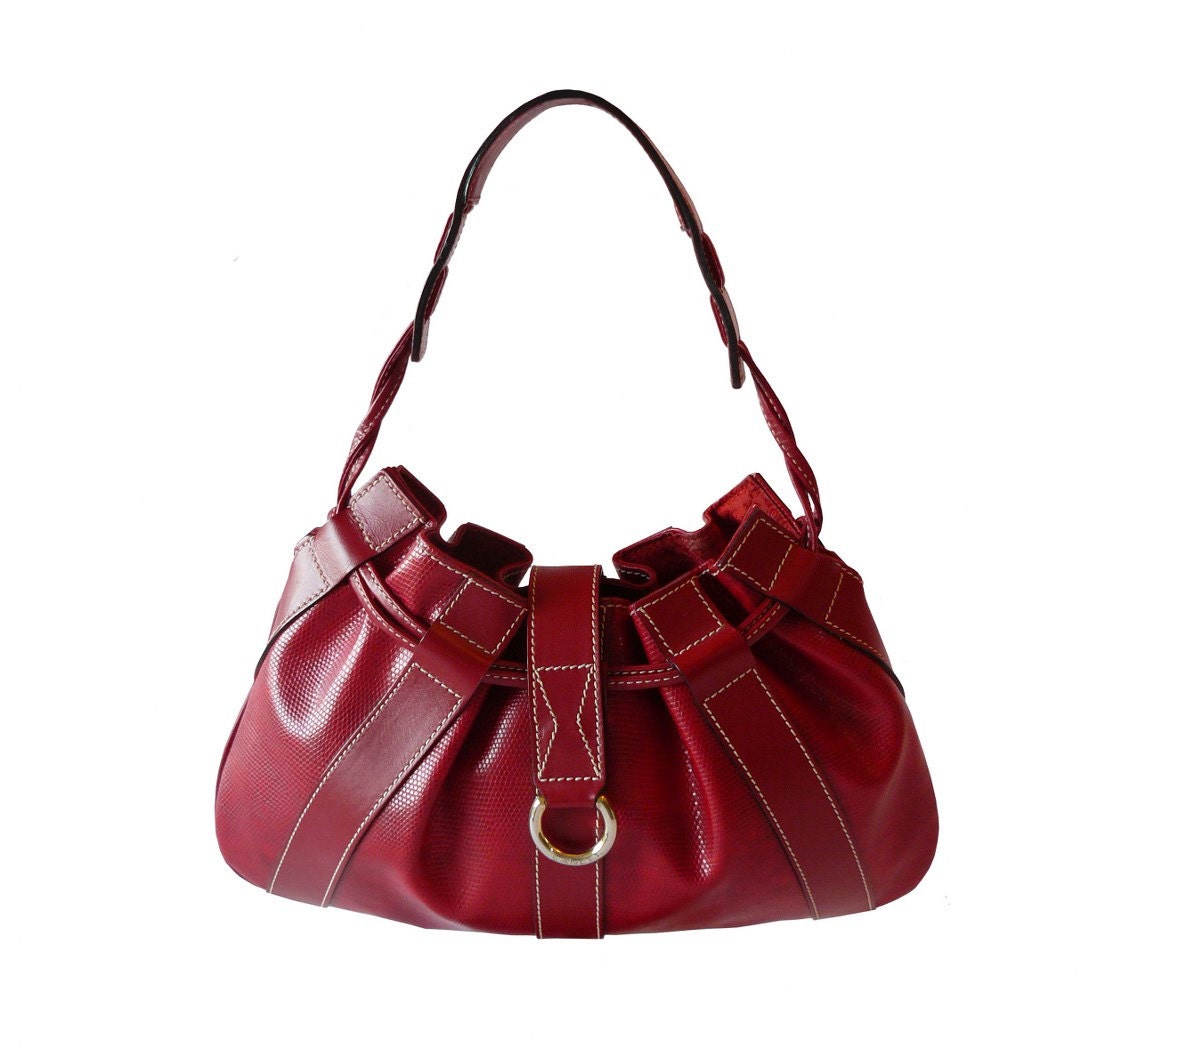 Authentic Lancel Paris Red Leather Drawstring Handbag Made in